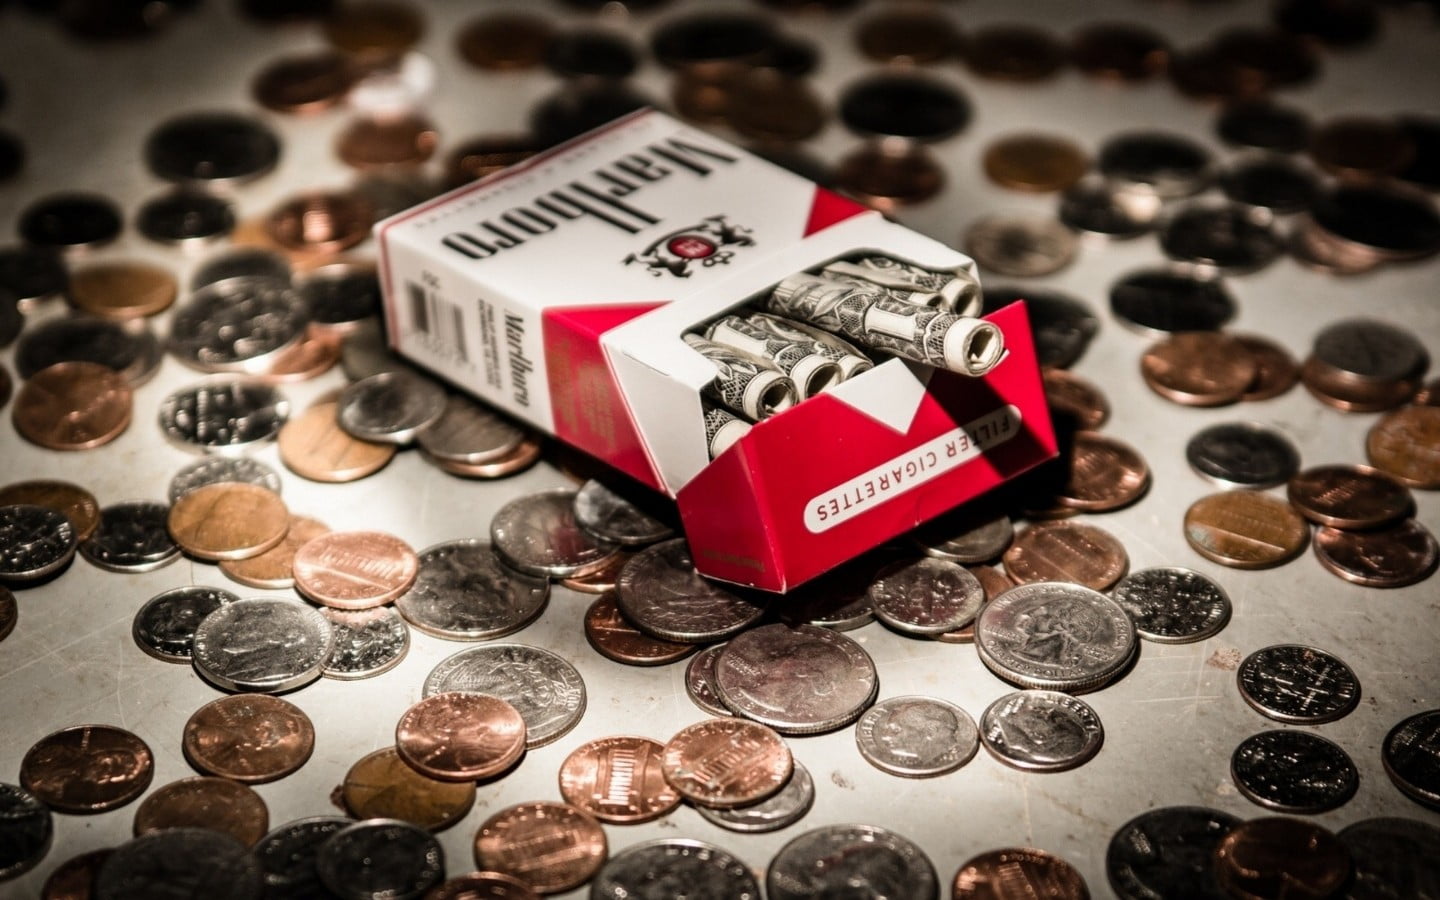 Marlboro cigarette box, cigarettes, money, dollars, coins, wealth